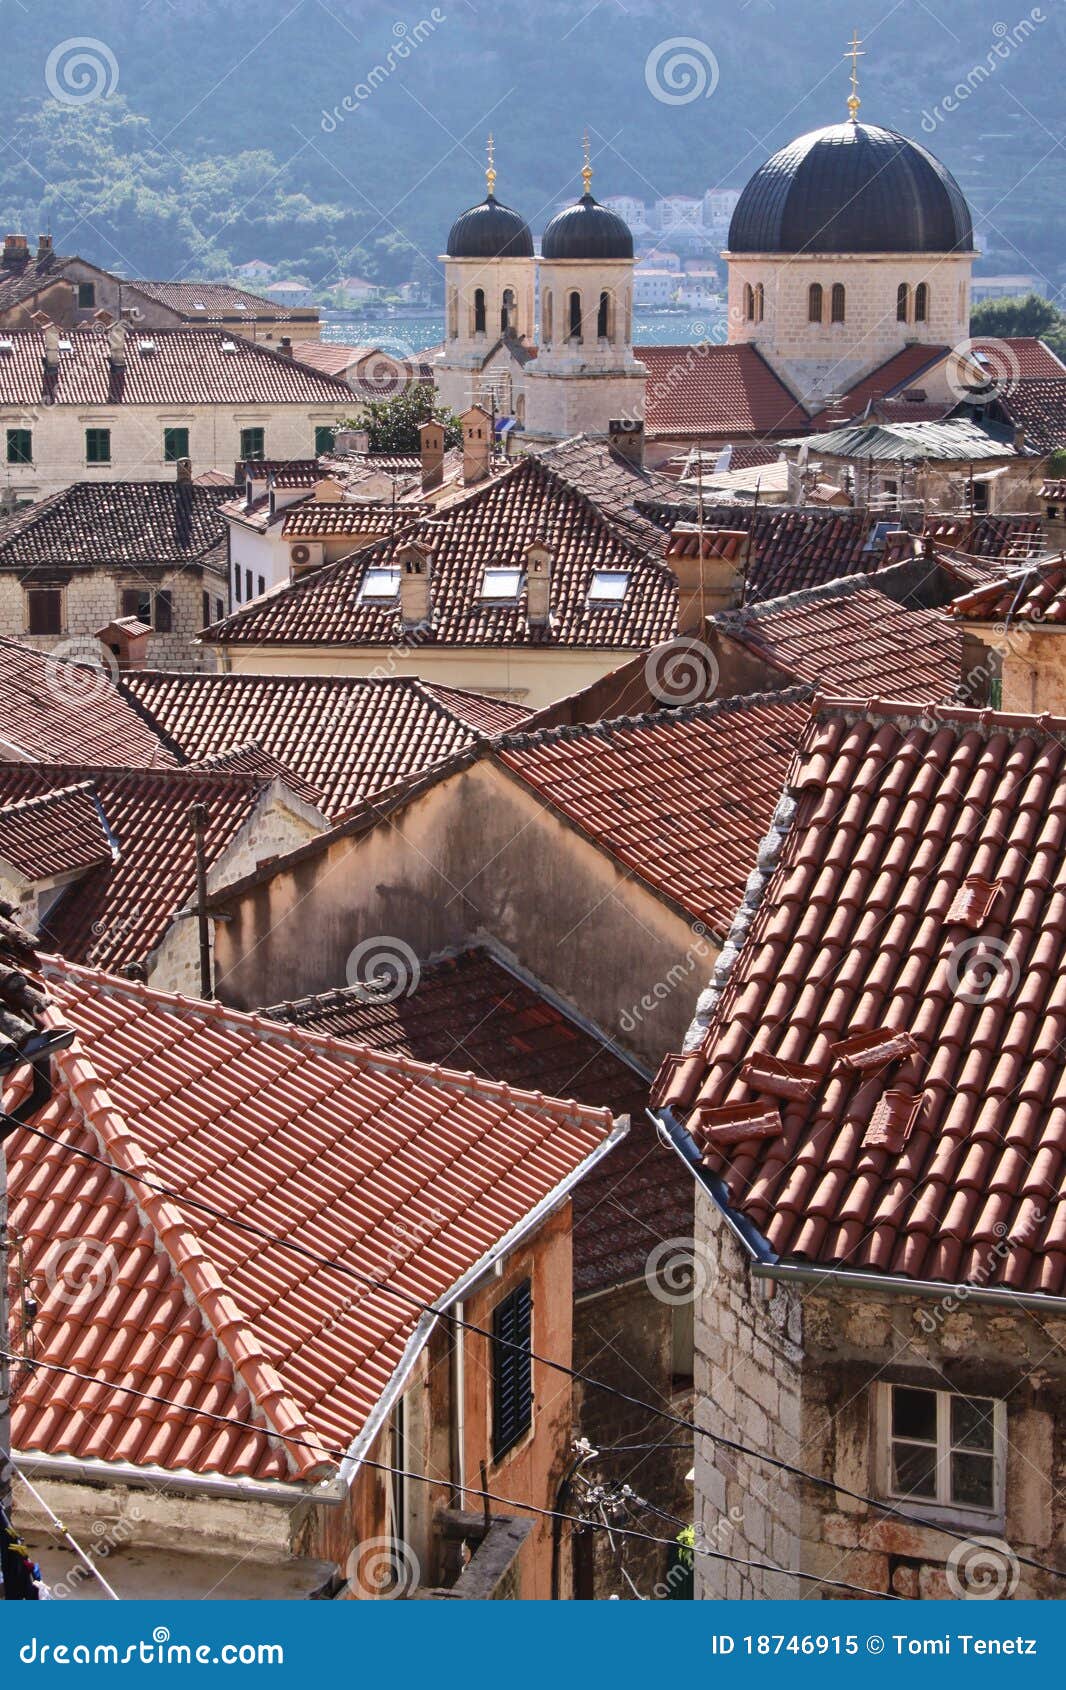 montenegro: roofs of kotor